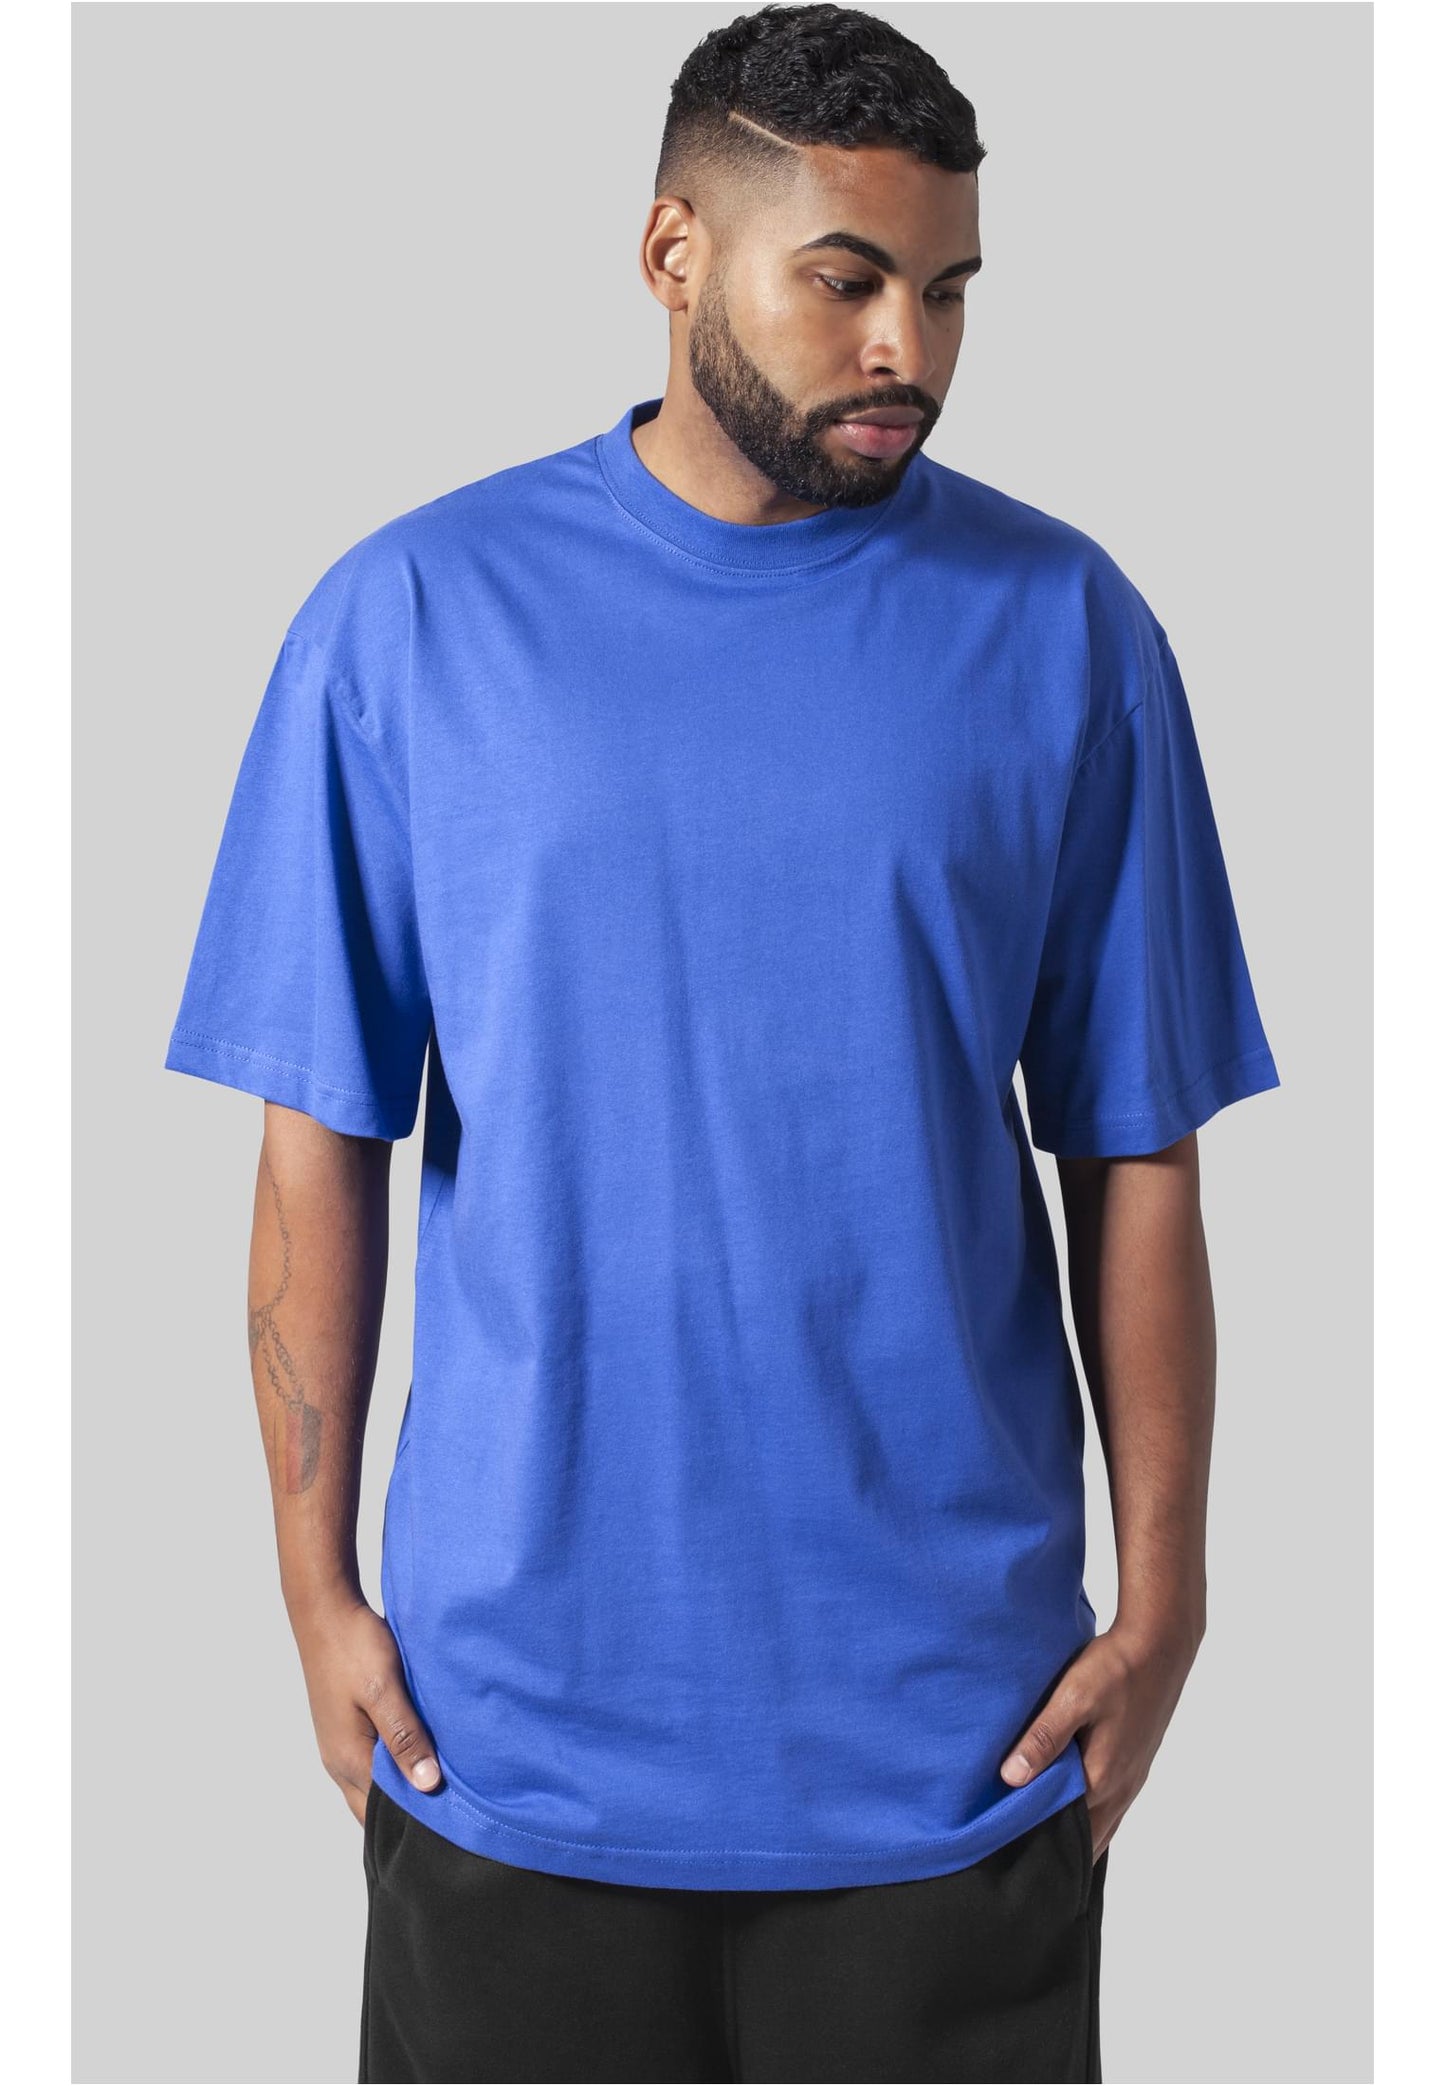 Urban Classics Tall T-Shirt Baggy / Loose Fit in Royal Blau